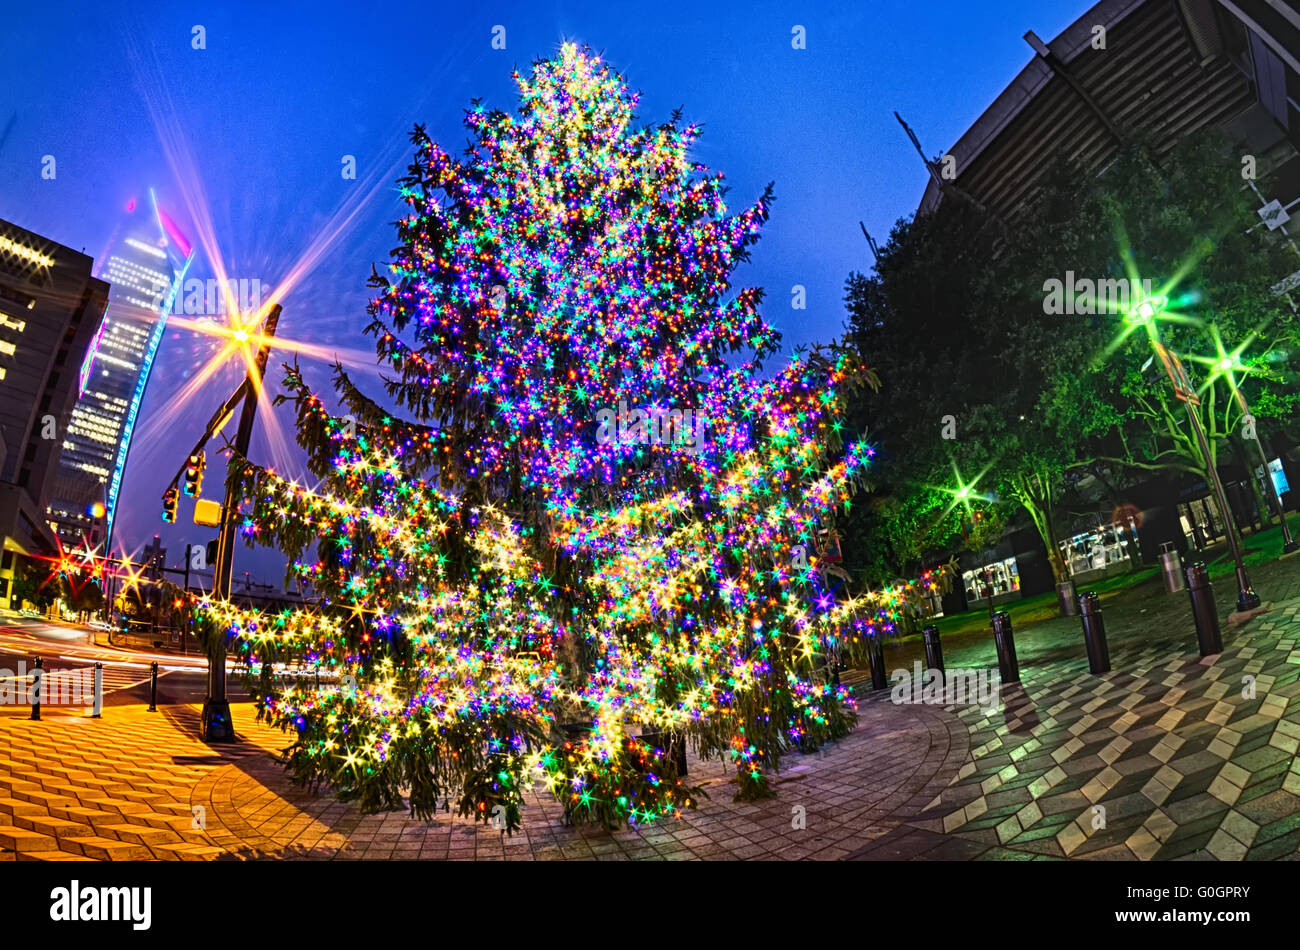 Charlotte nc christmas tree hi-res stock photography and images - Alamy